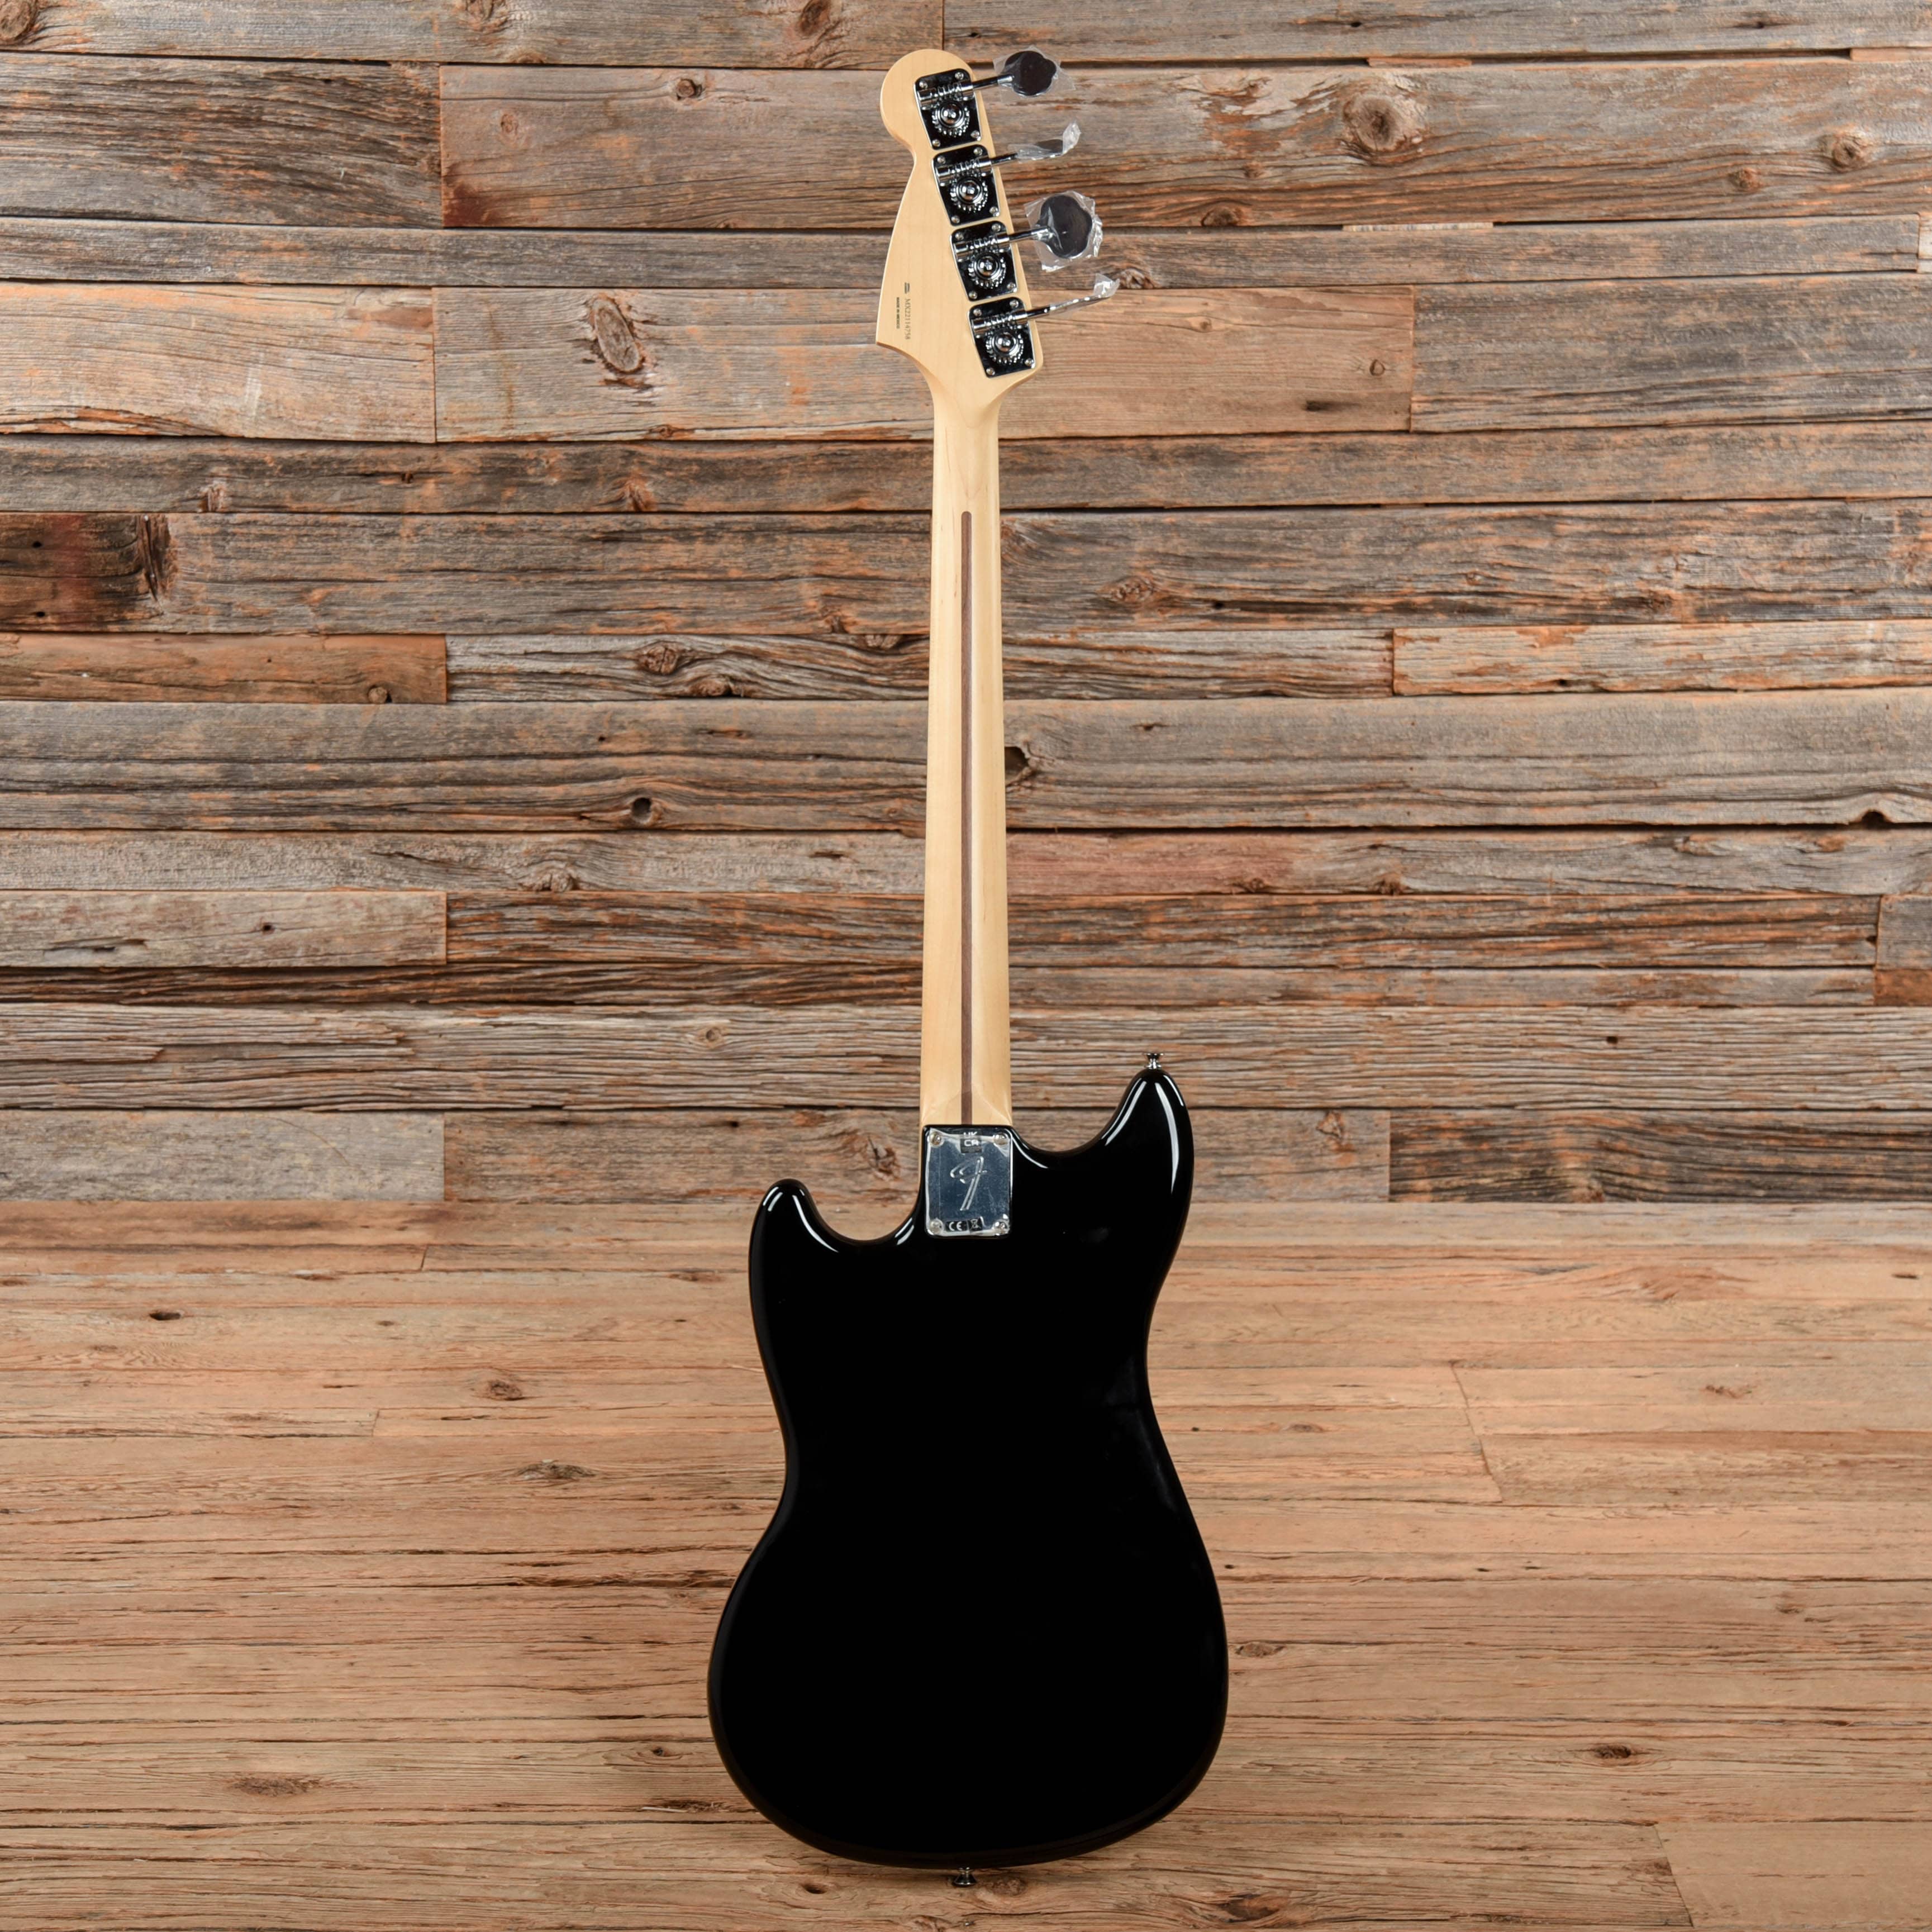 Fender Player Mustang Bass PJ Black w/Tortoise Pickguard Bass Guitars / Short Scale